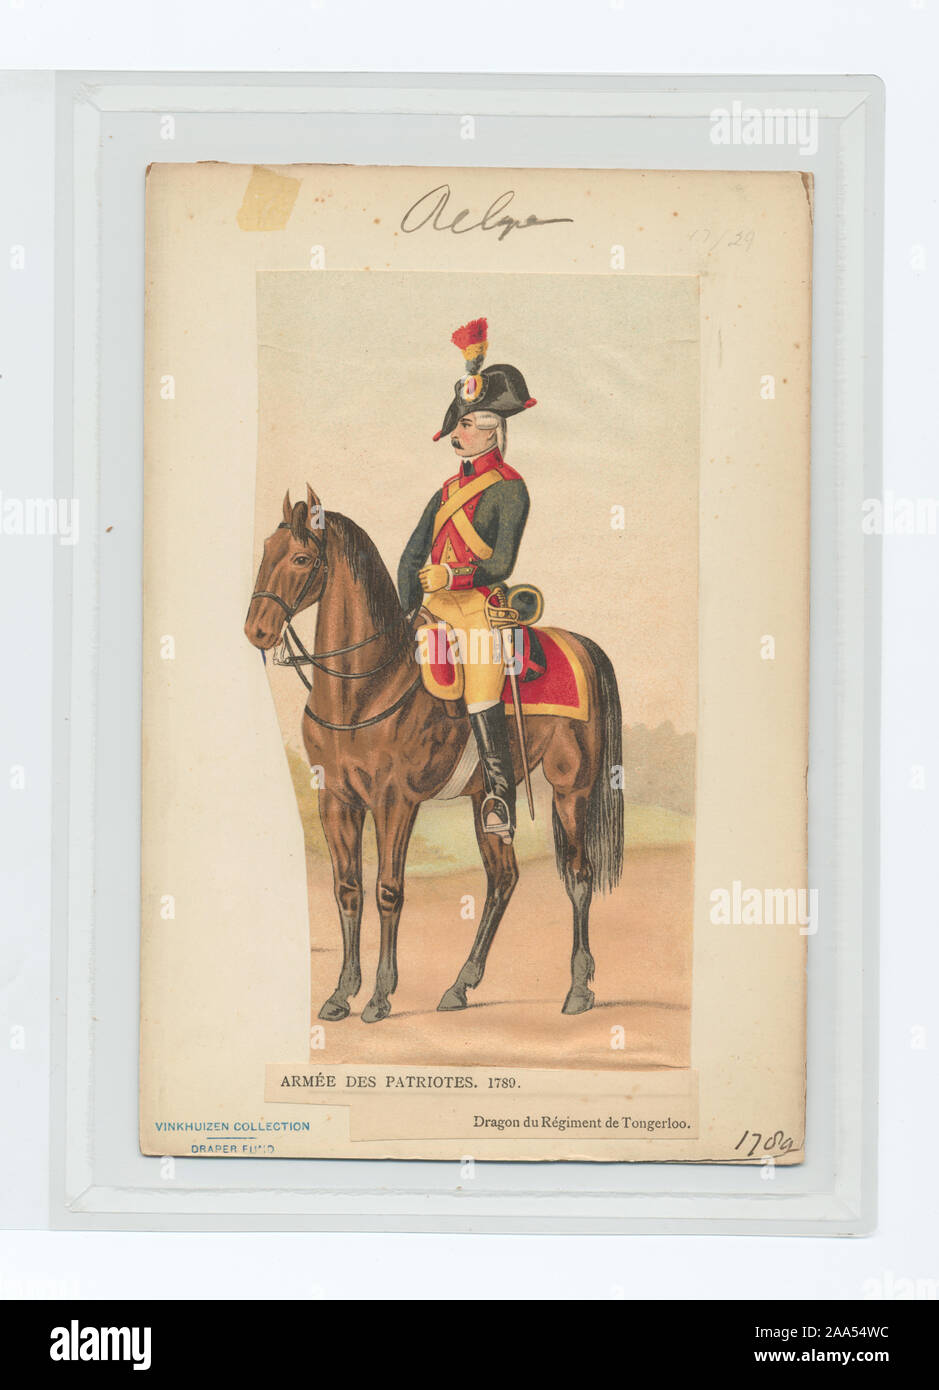 Ownership : The Draper Fund (571237) Patriot Army : Tongerloo dragoons,  1789 (Rouen); Armée des patriotes. 1789. Dragon du régiment de Tongerloo  Stock Photo - Alamy